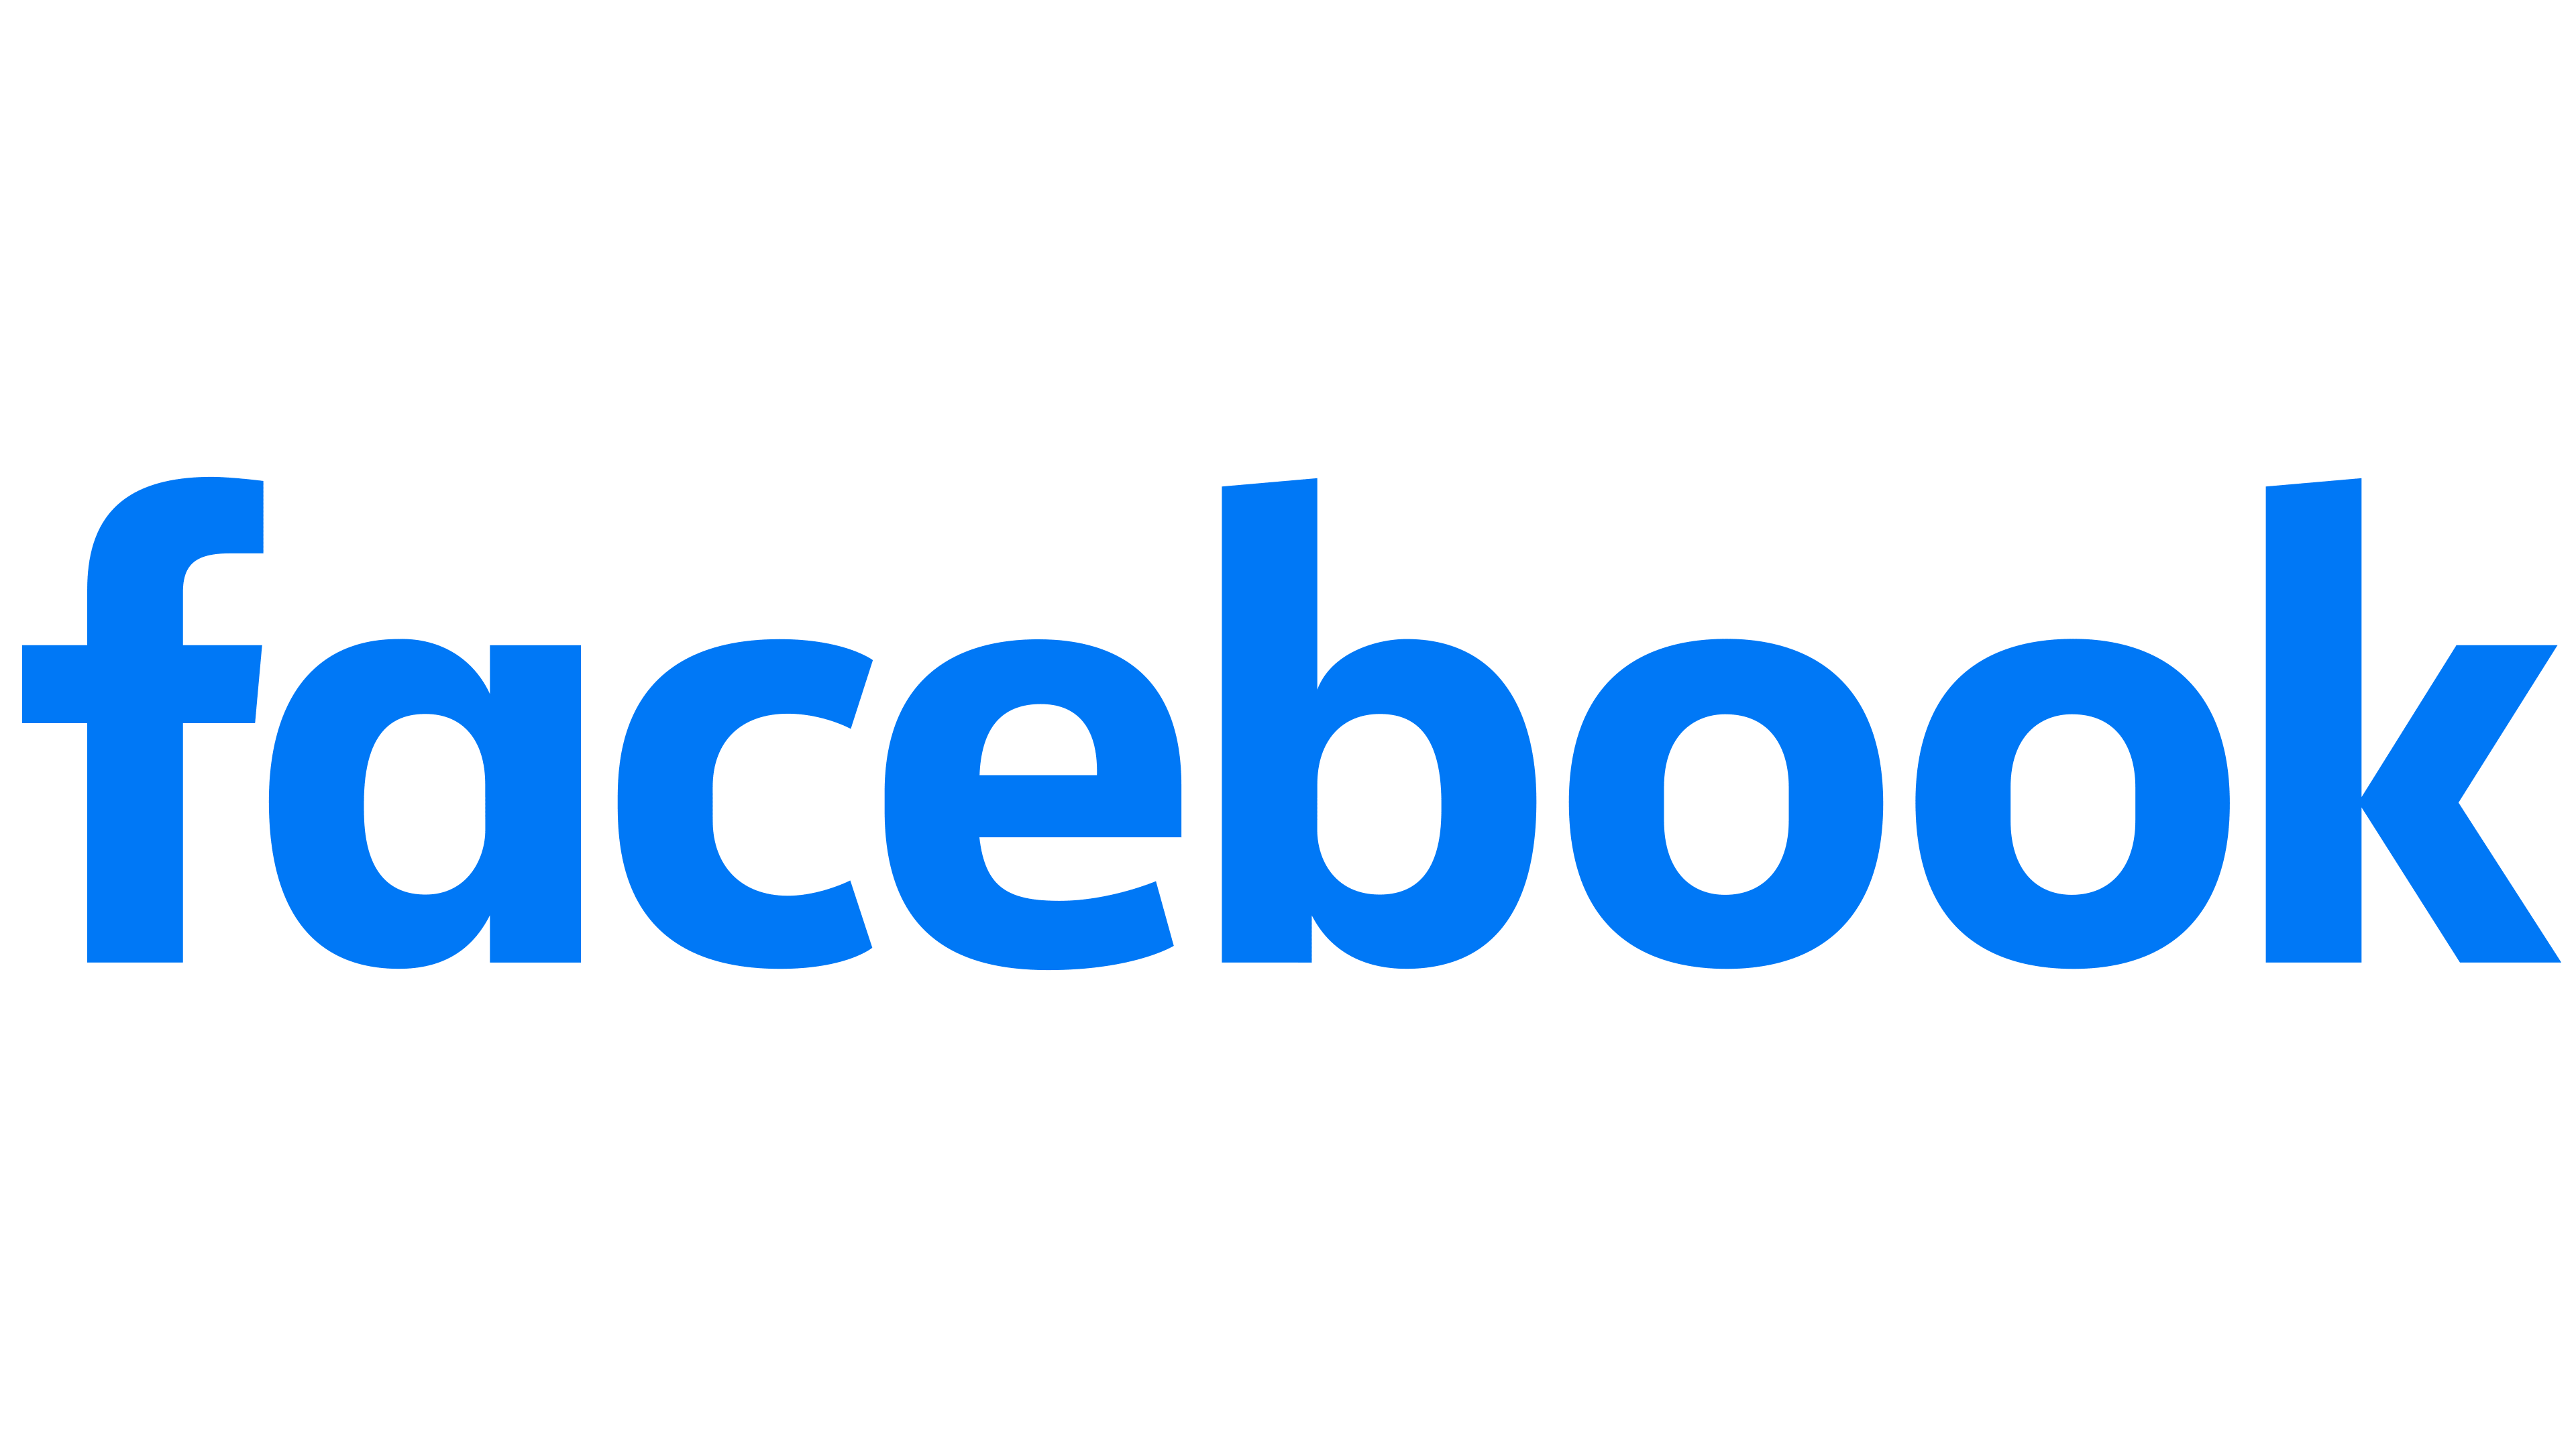 Social Media Marketing with Facebook